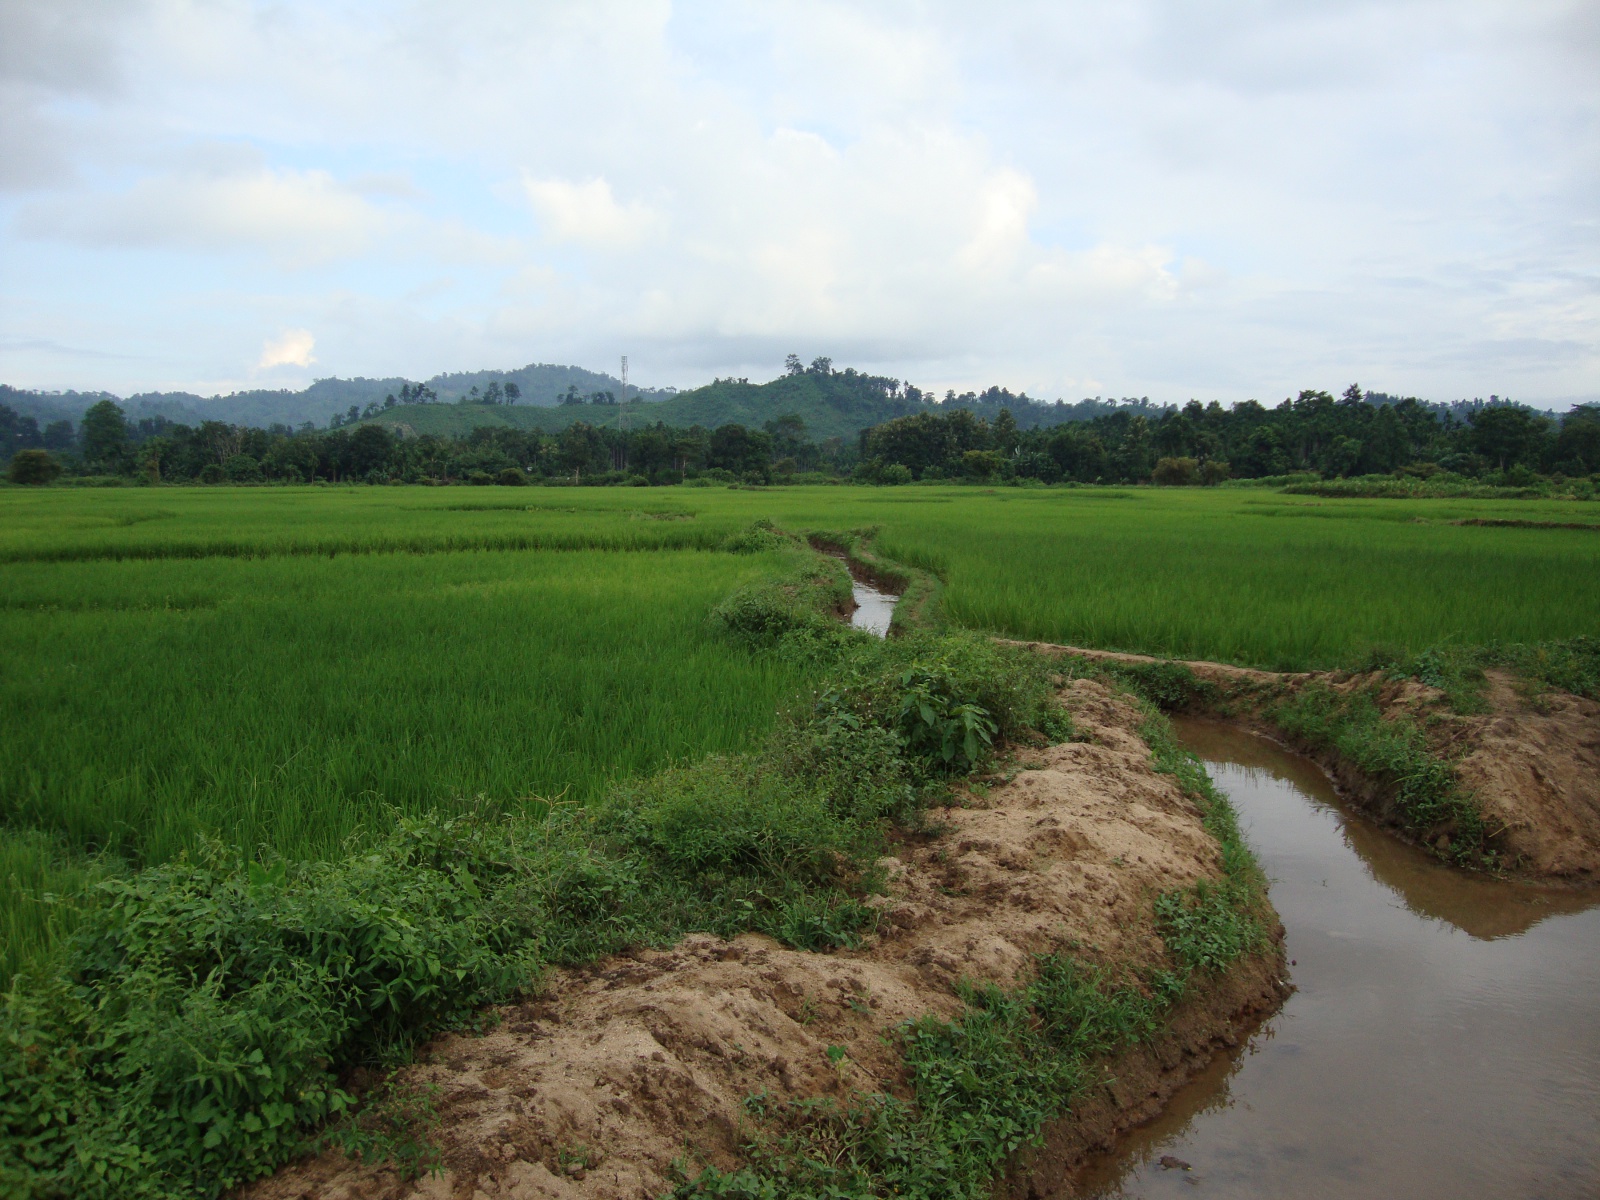 An irrigation ditch among paddy fields.